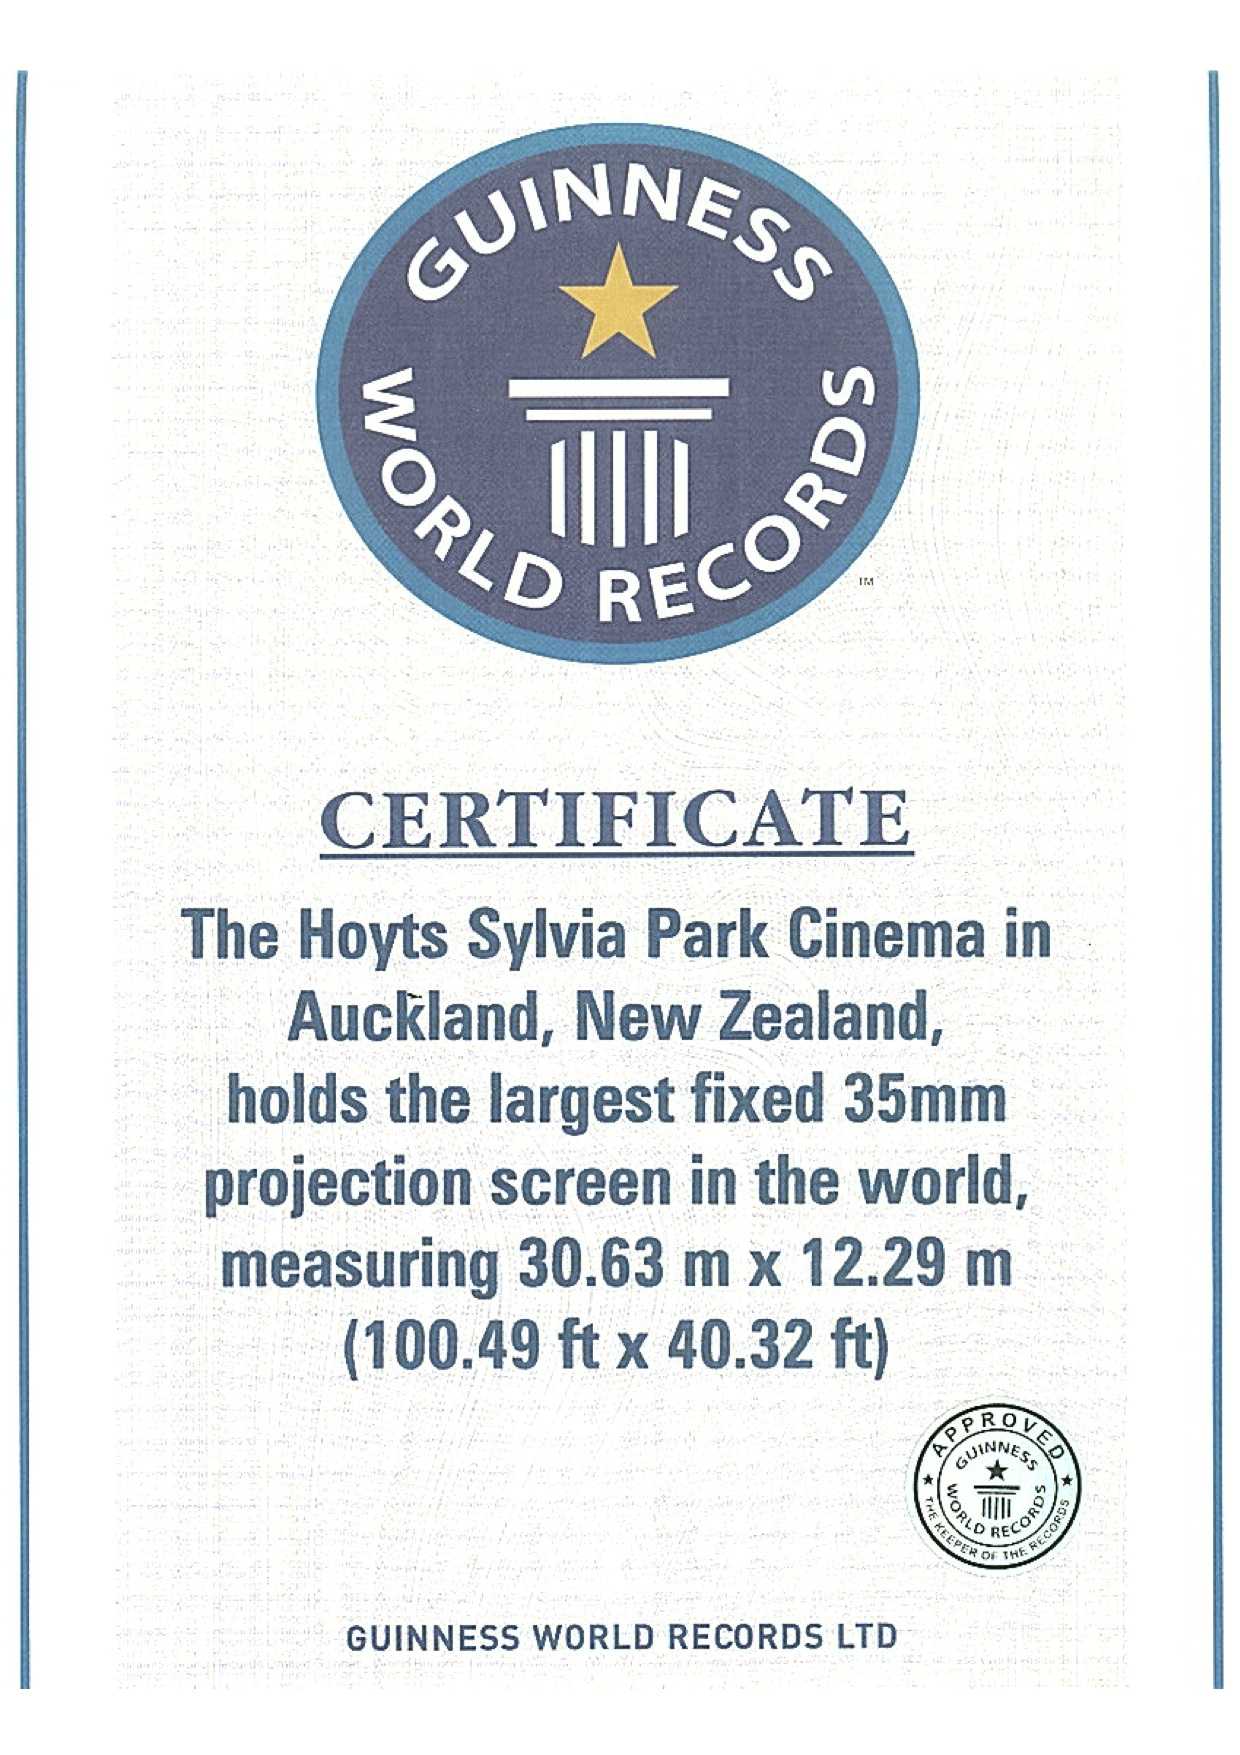 Guinness Certificate - Specialty Cinema Regarding Guinness World Record Certificate Template